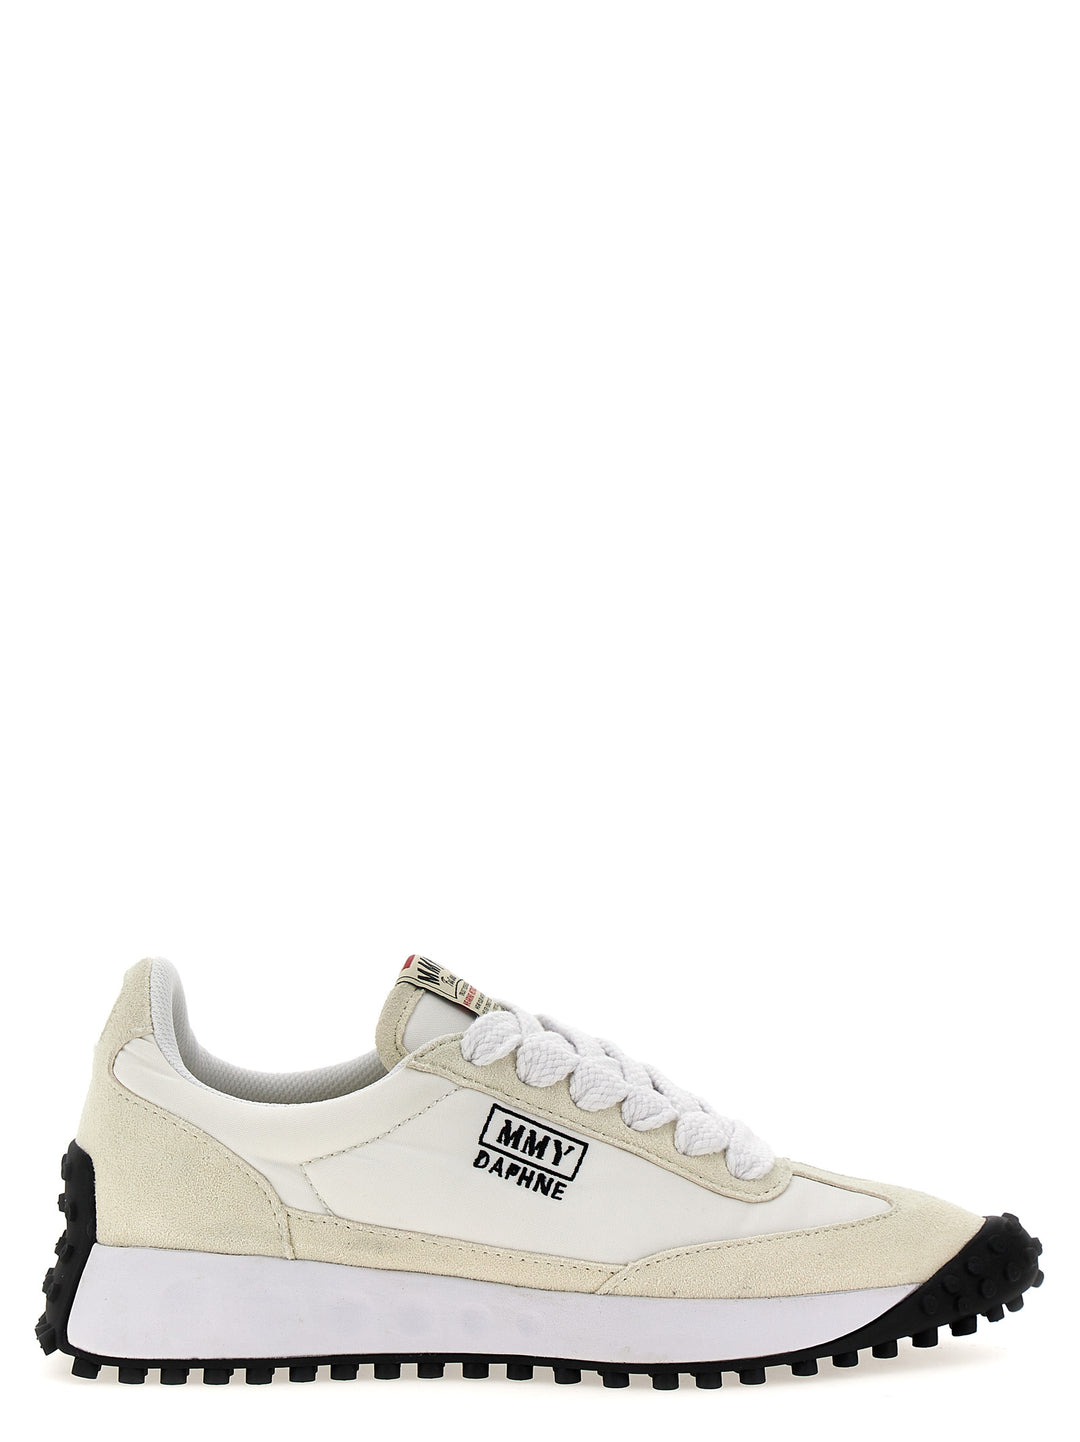 Daphne Sneakers Bianco